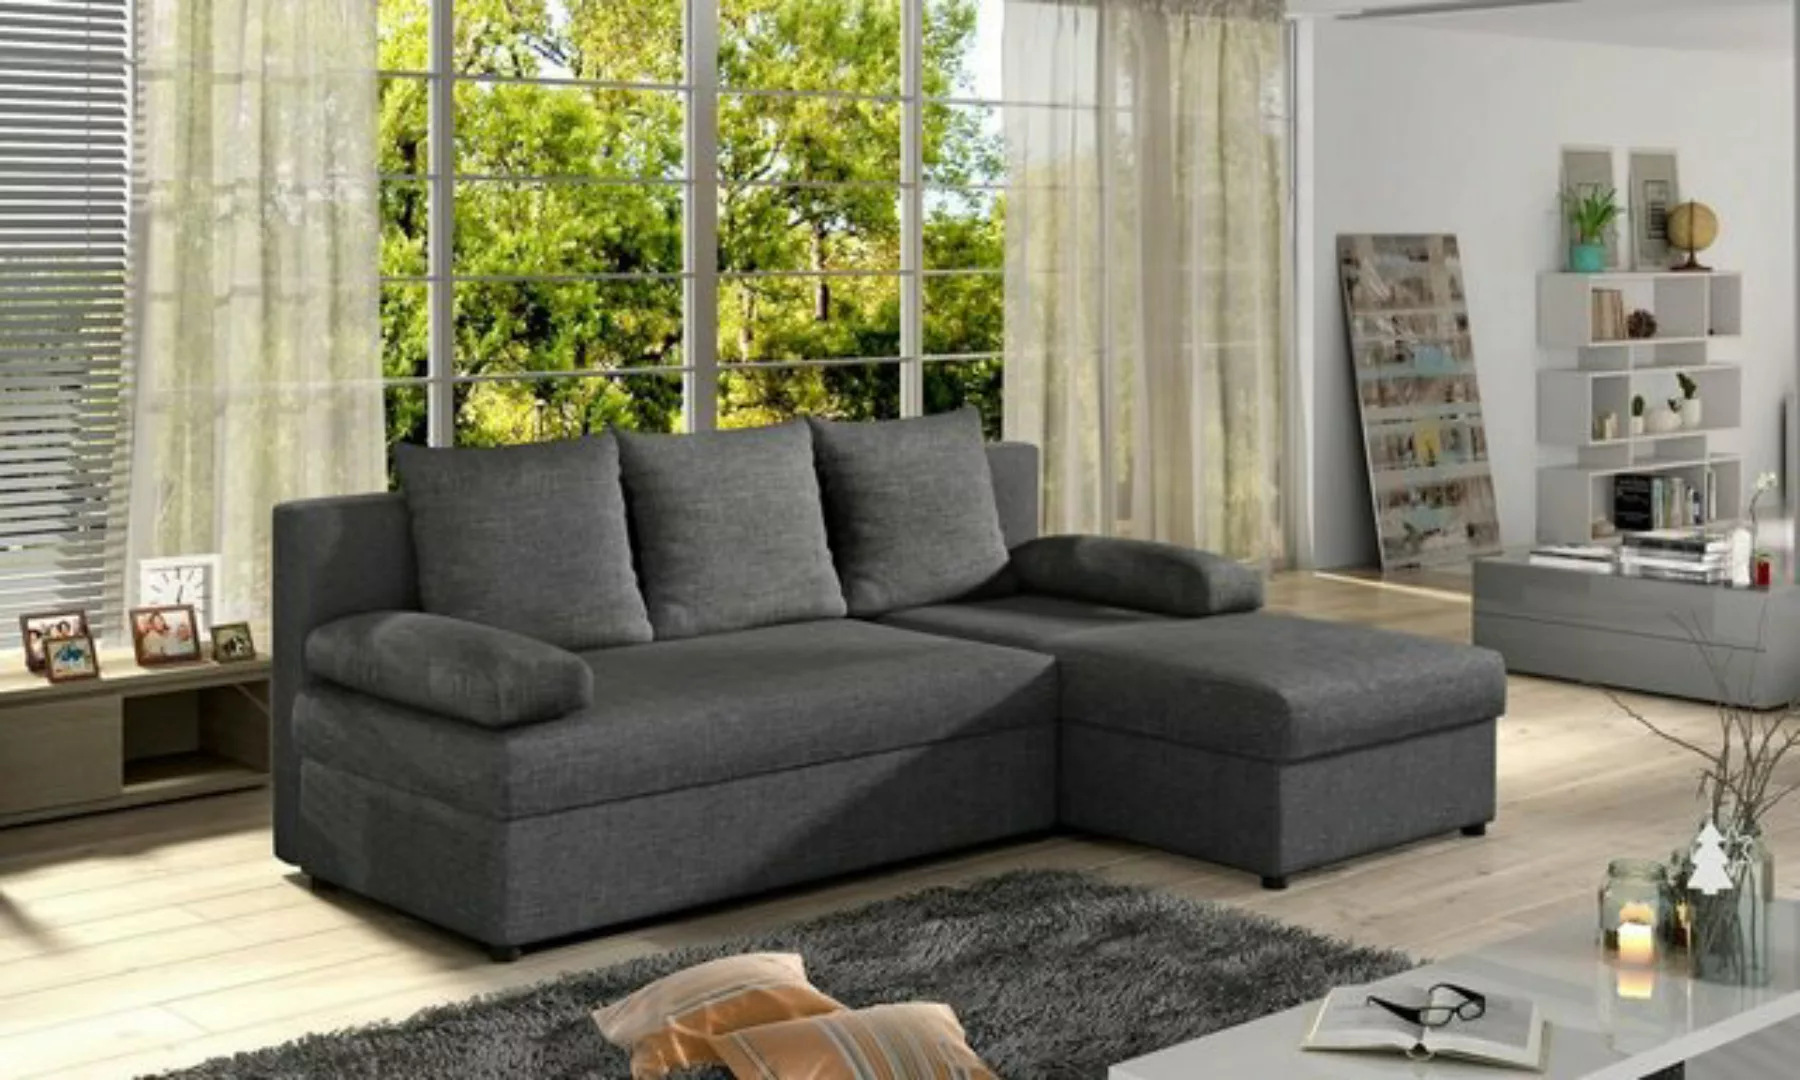 JVmoebel Ecksofa Moderne Schlafsofa Couch Polster Ecksofa Garnitur Bettfunk günstig online kaufen